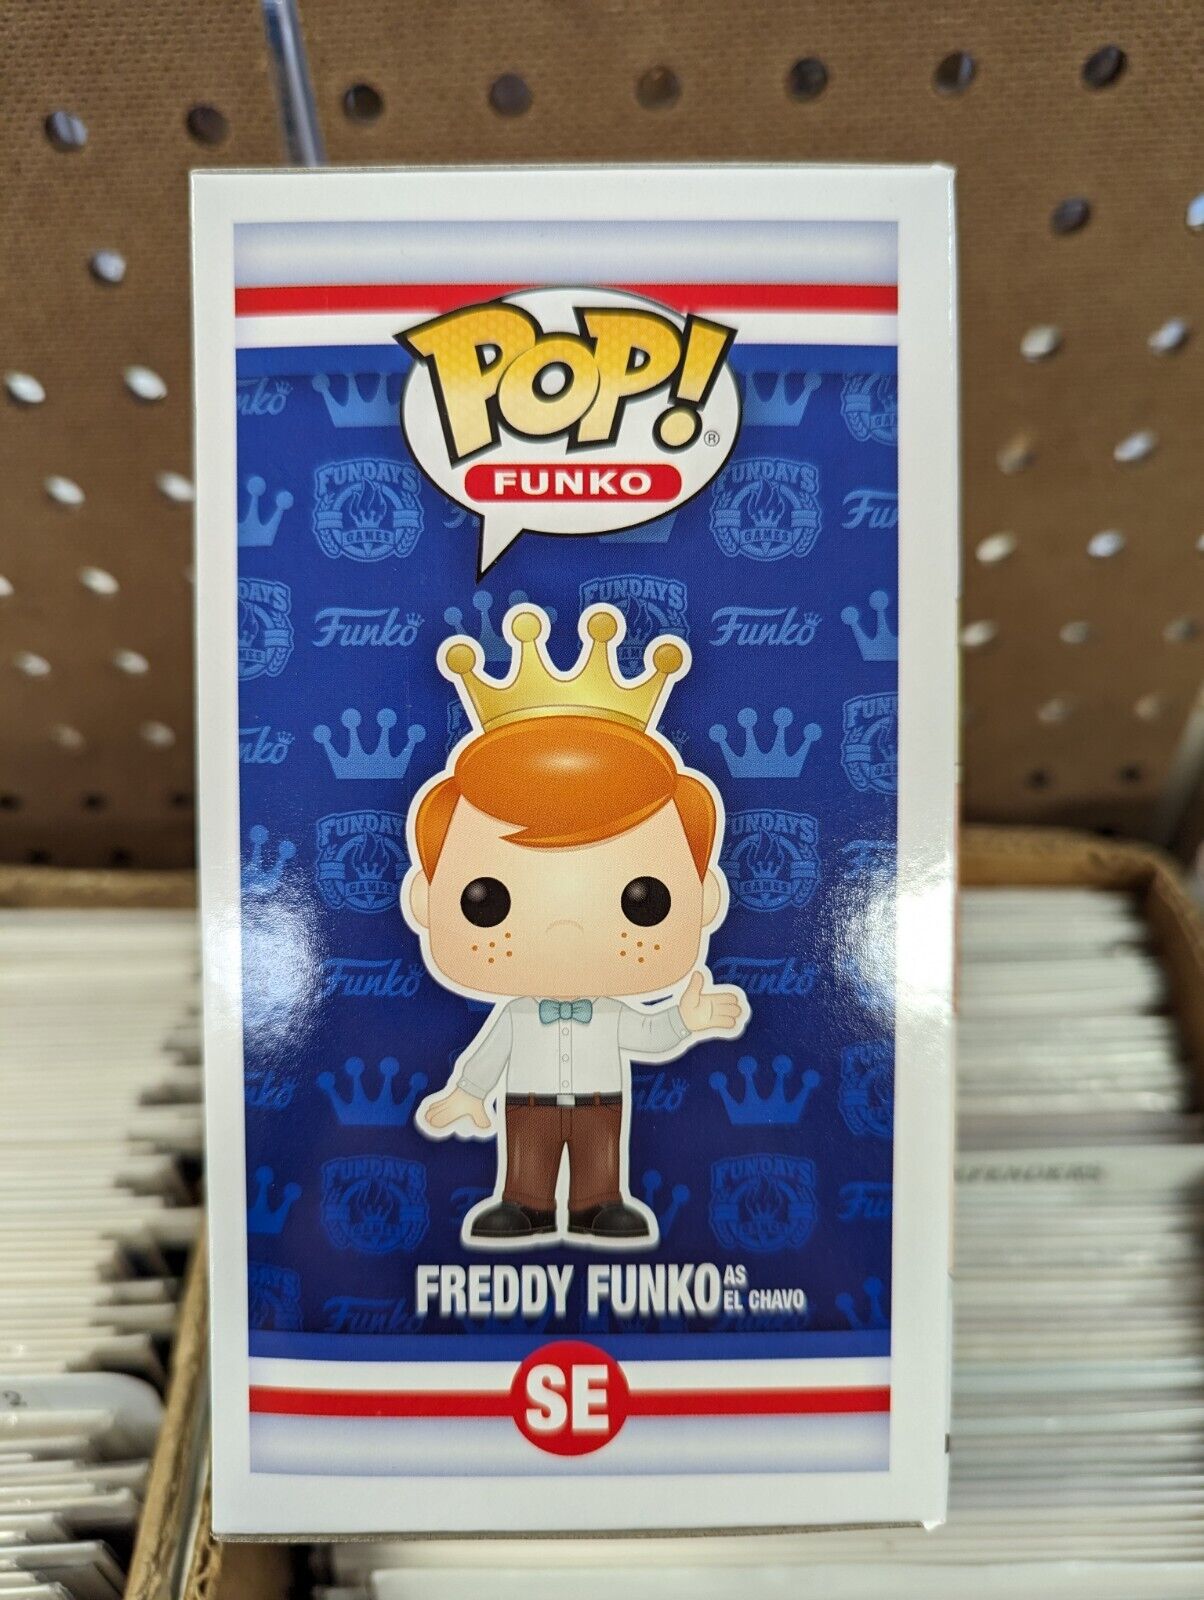 Funko Pop Freddy Funko As El Chavo SE Box Of Fun 3000 Pcs